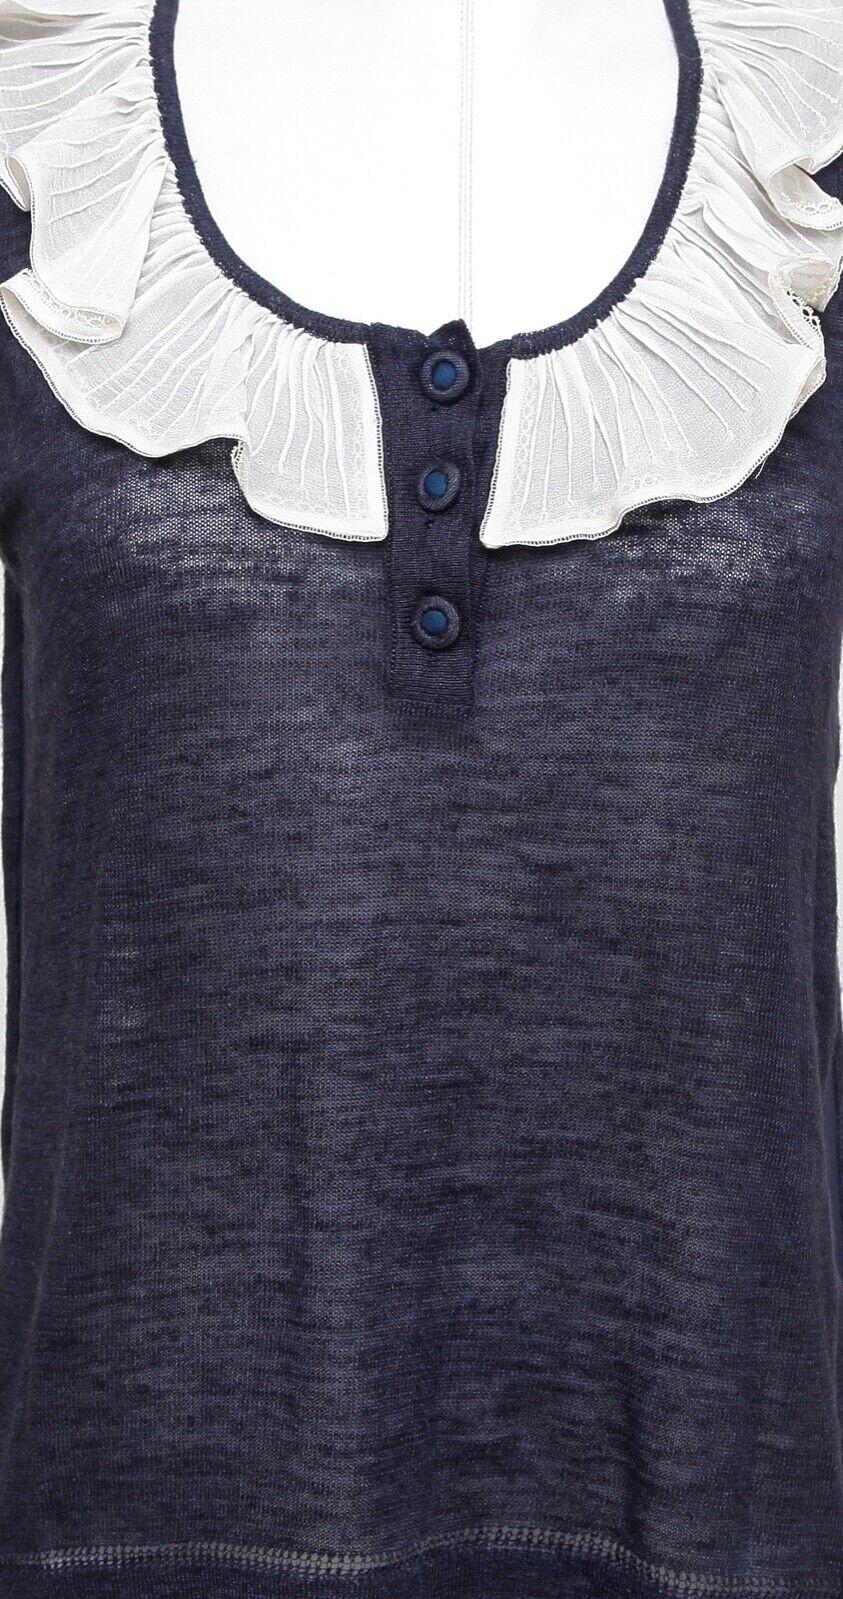 Women's CHLOE Sleeveless Top Shirt Sleeveless Navy Ivory Ruffle Henley XS 2007 For Sale